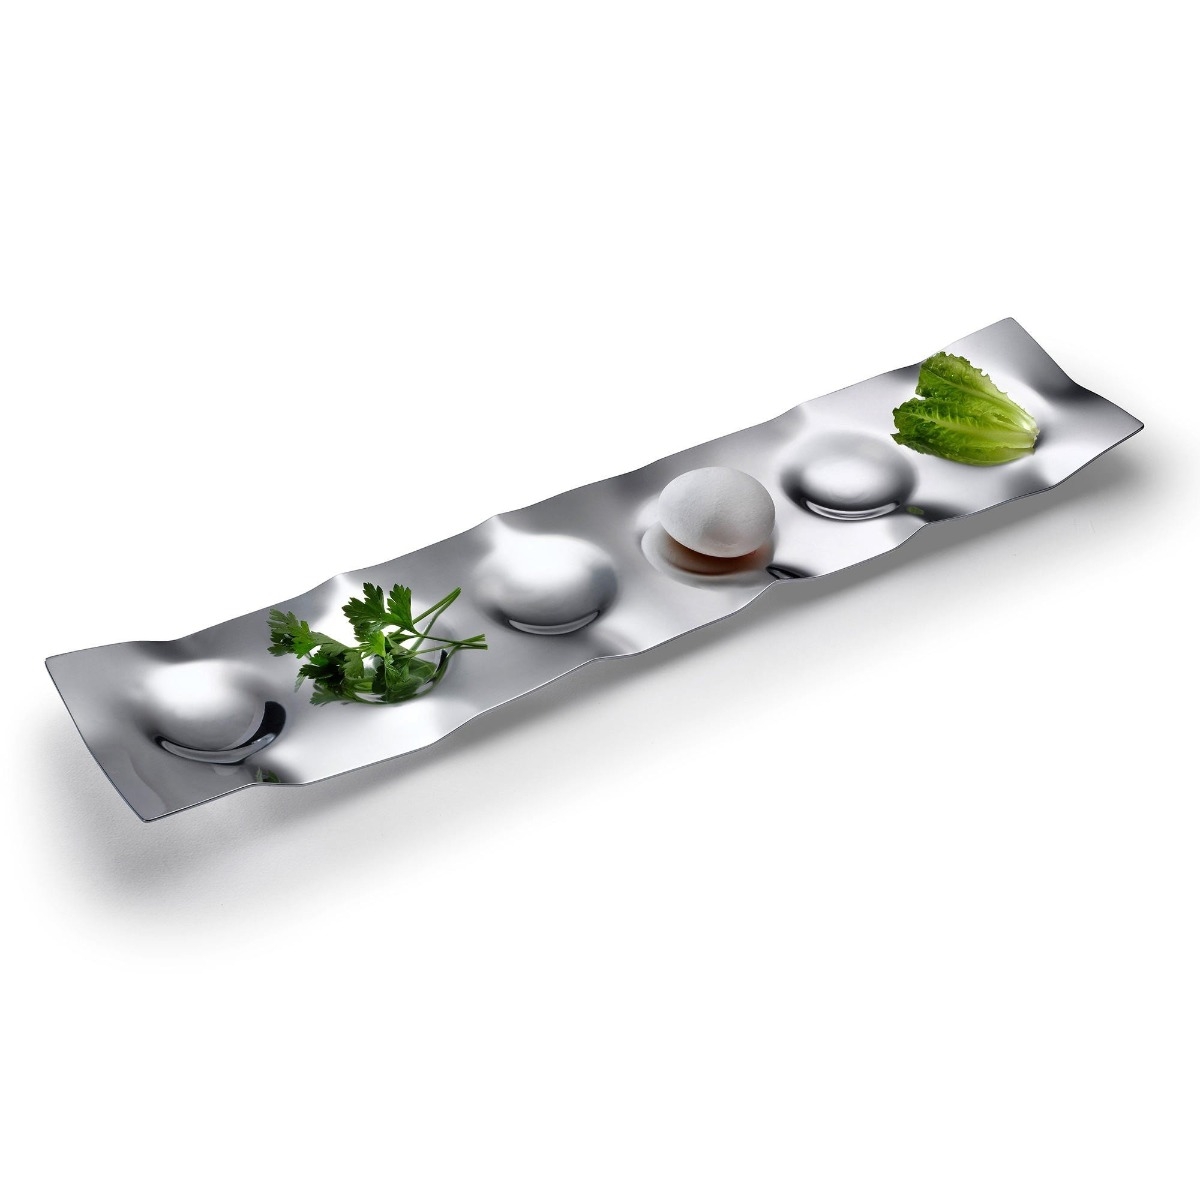 Laura Cowan Seder Plate With Moon Path Design - 1